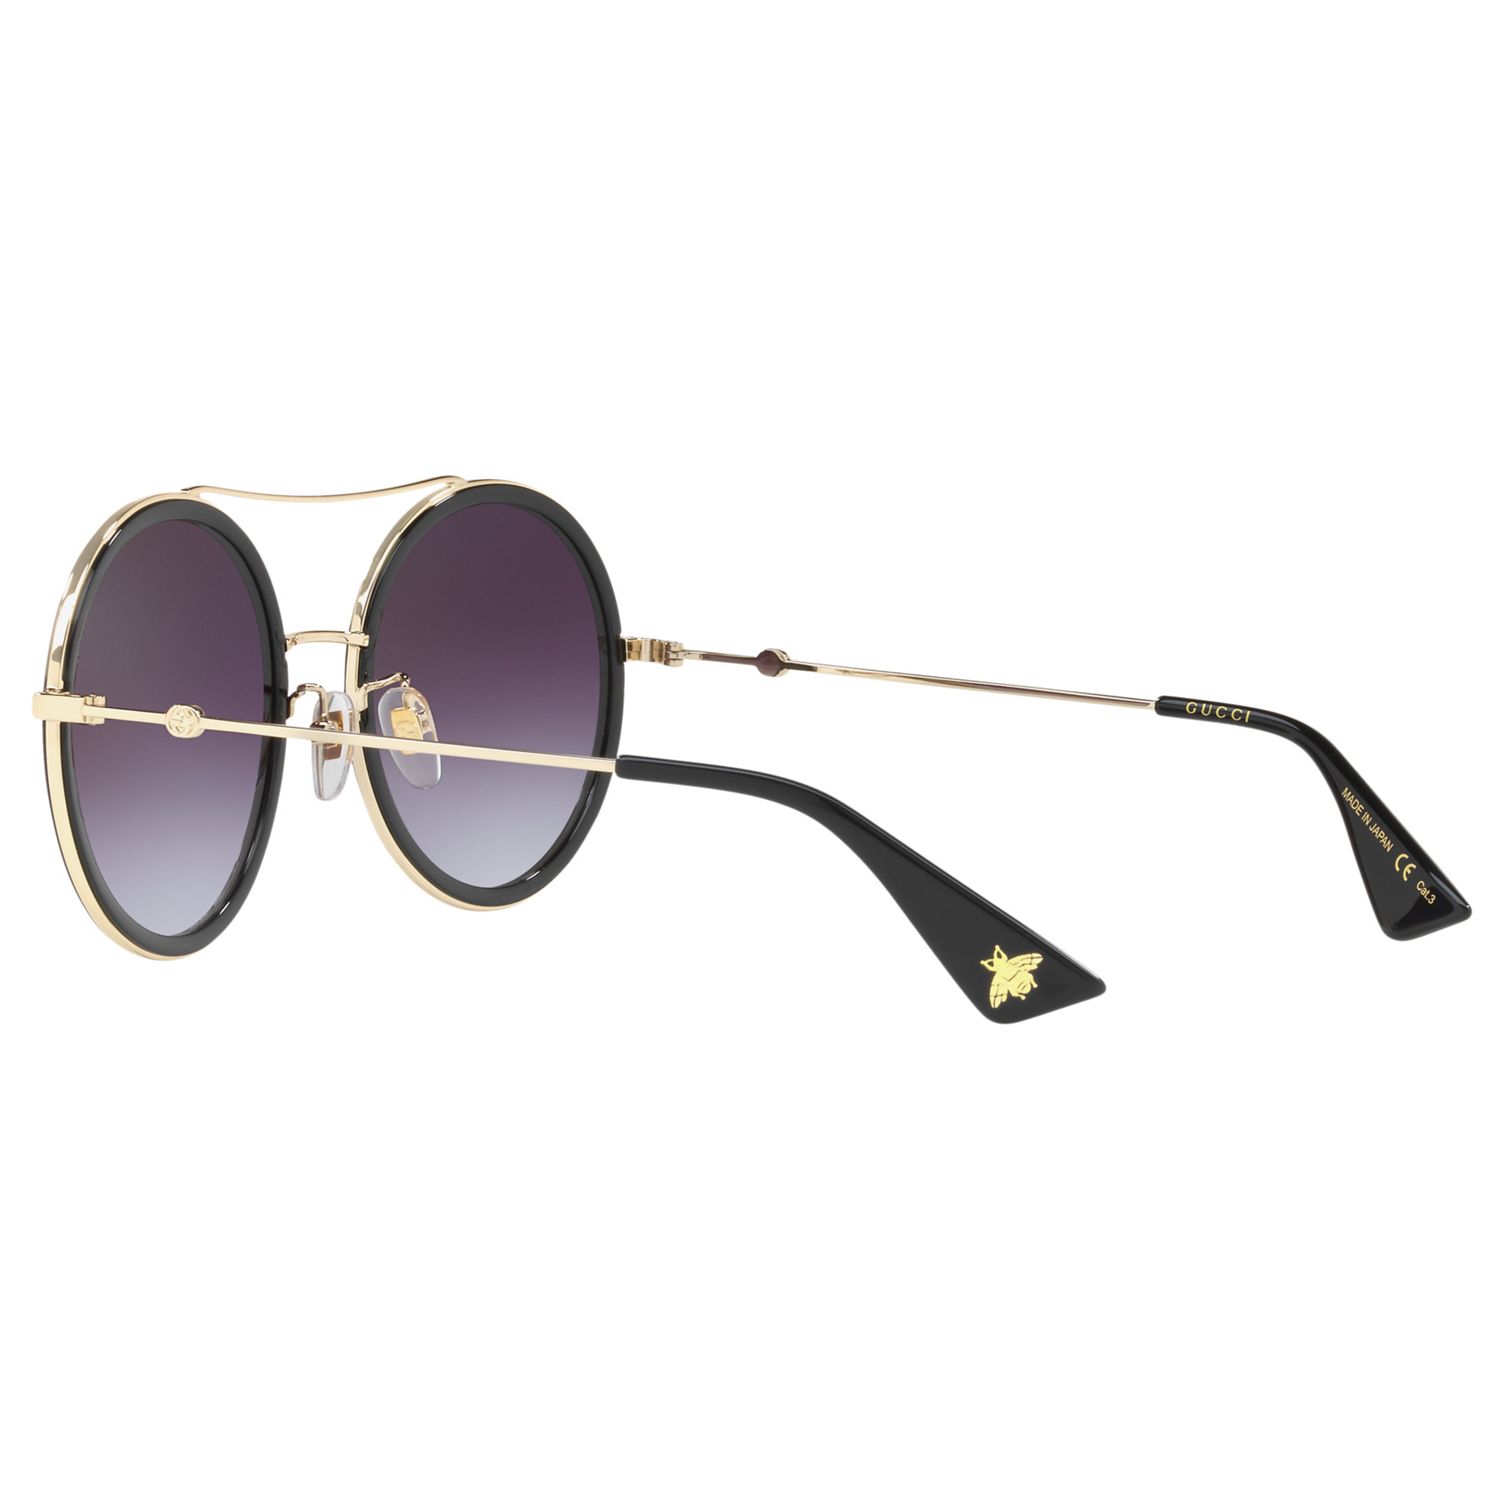 Gucci GG0016S Round Sunglasses, Charcoal/Purple Gradient